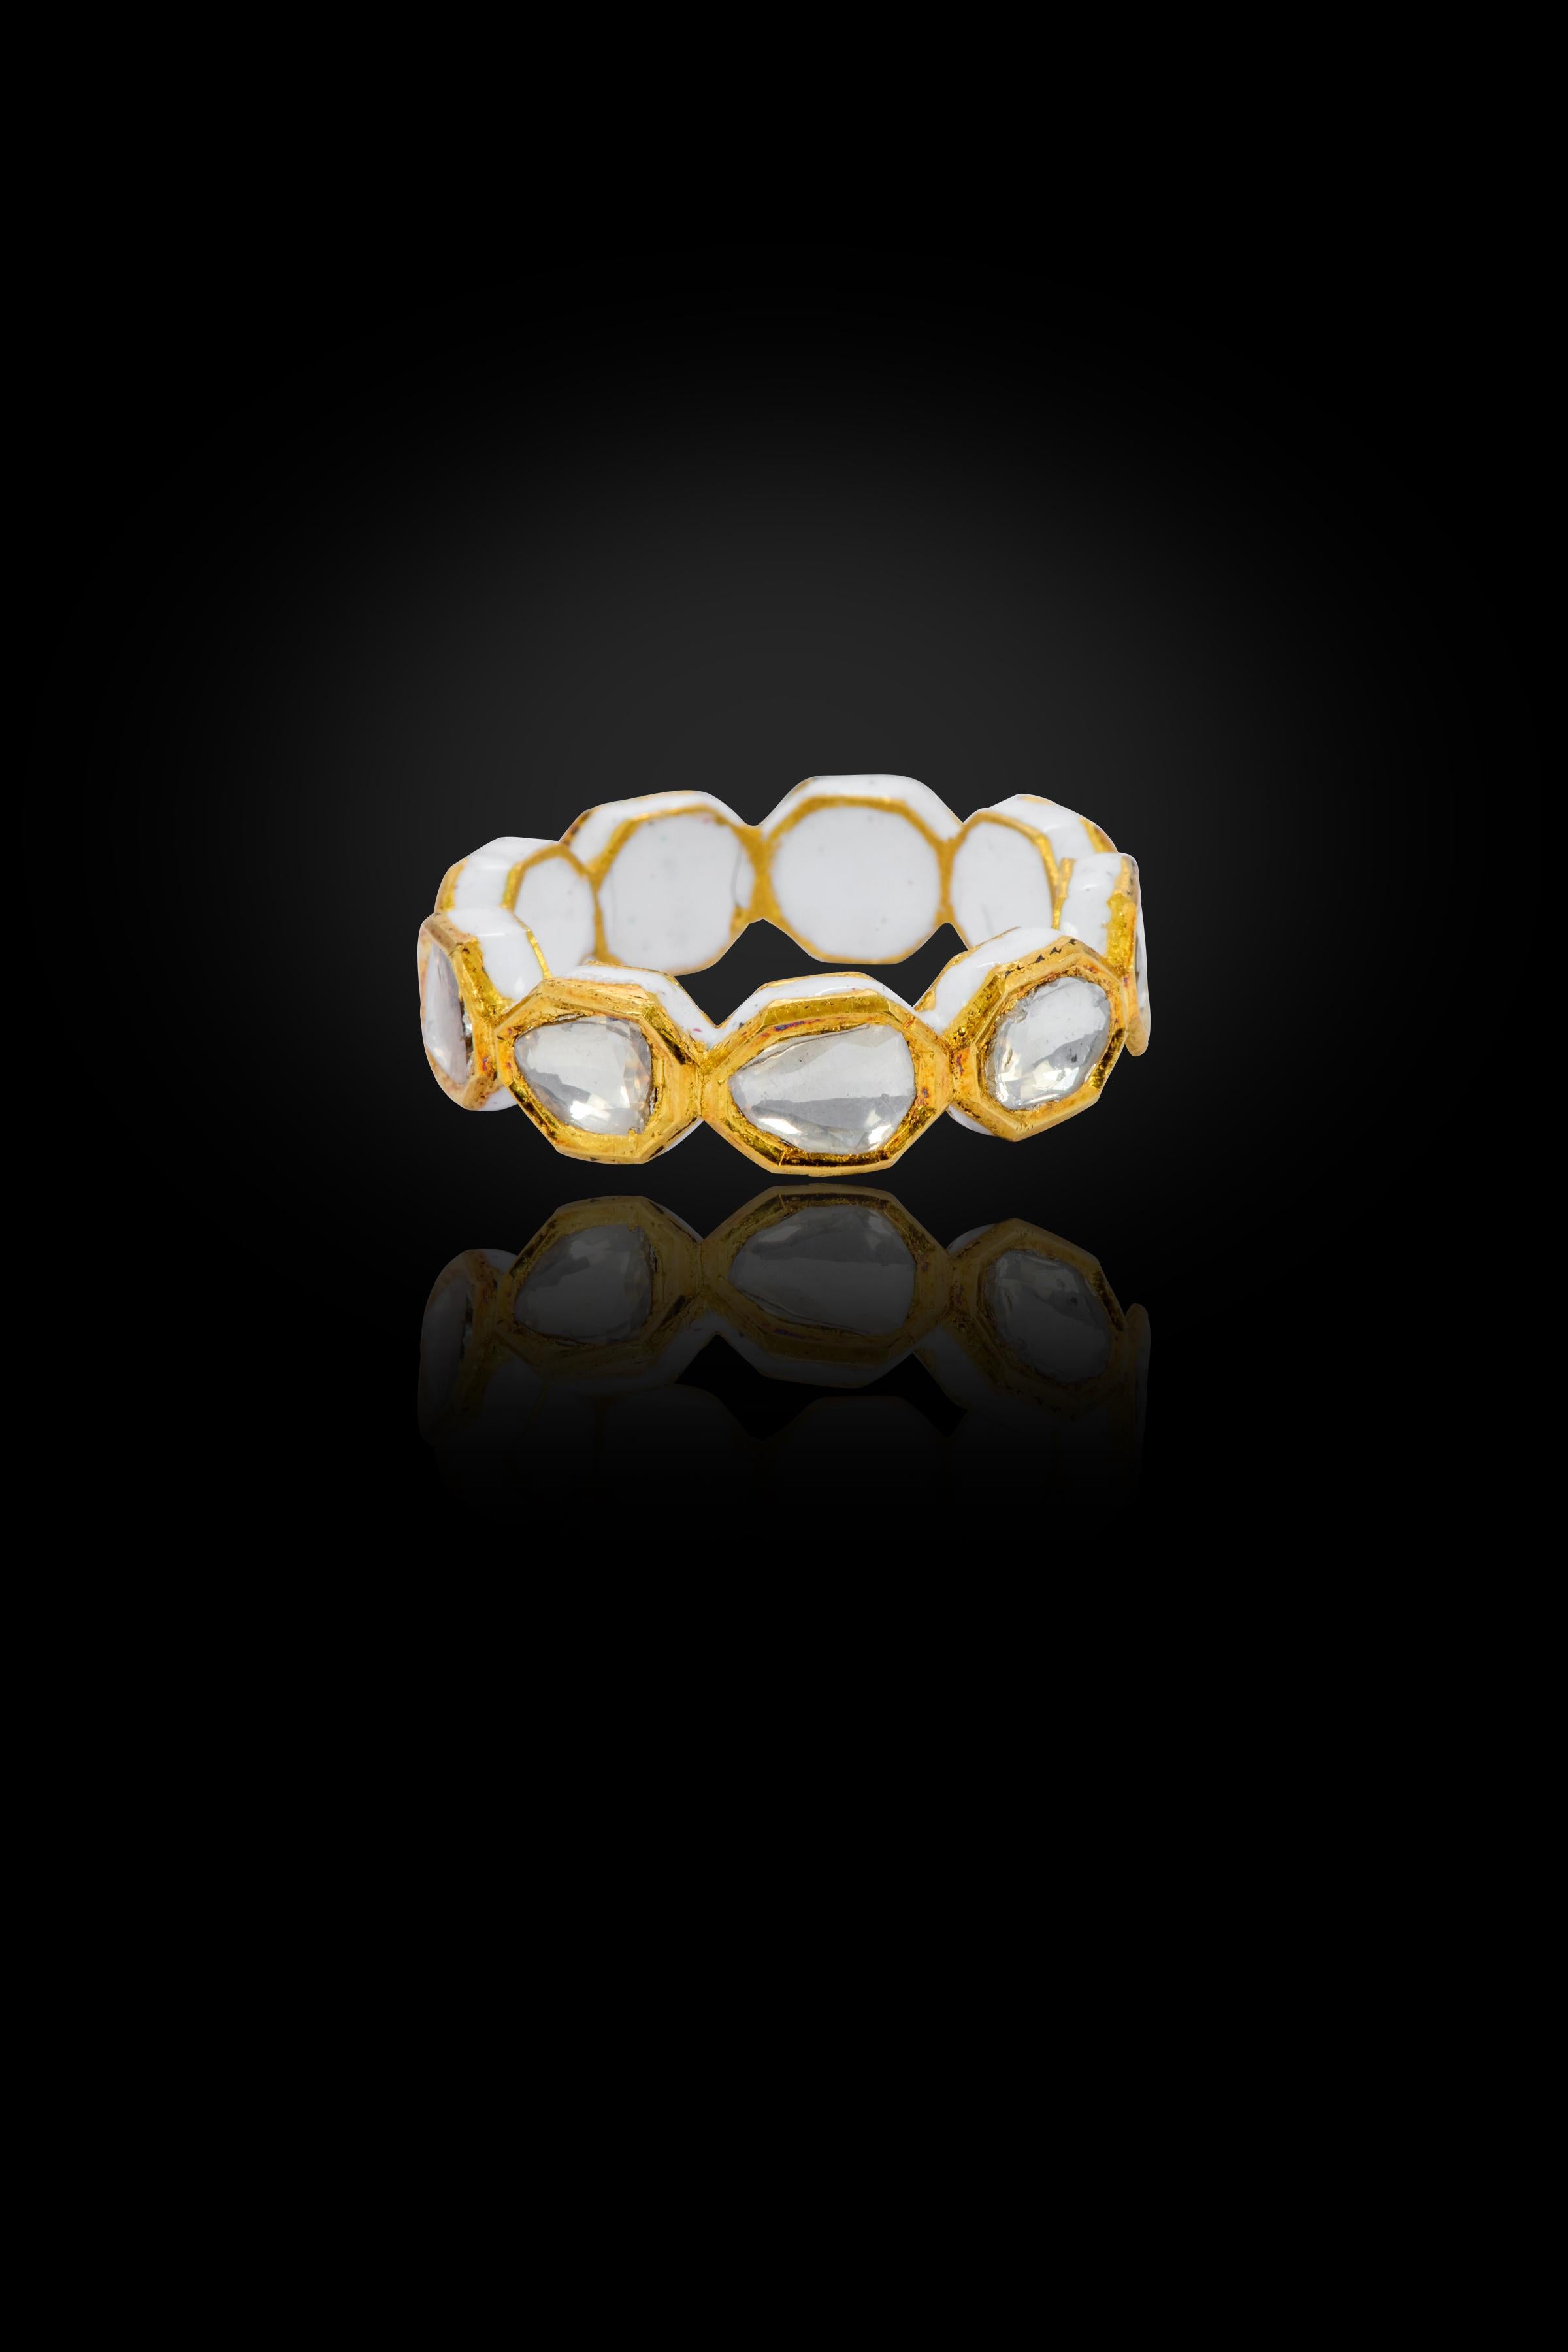 22 Karat Gold Diamond Eternity Full-Band Ring with White Enamel Work at ...